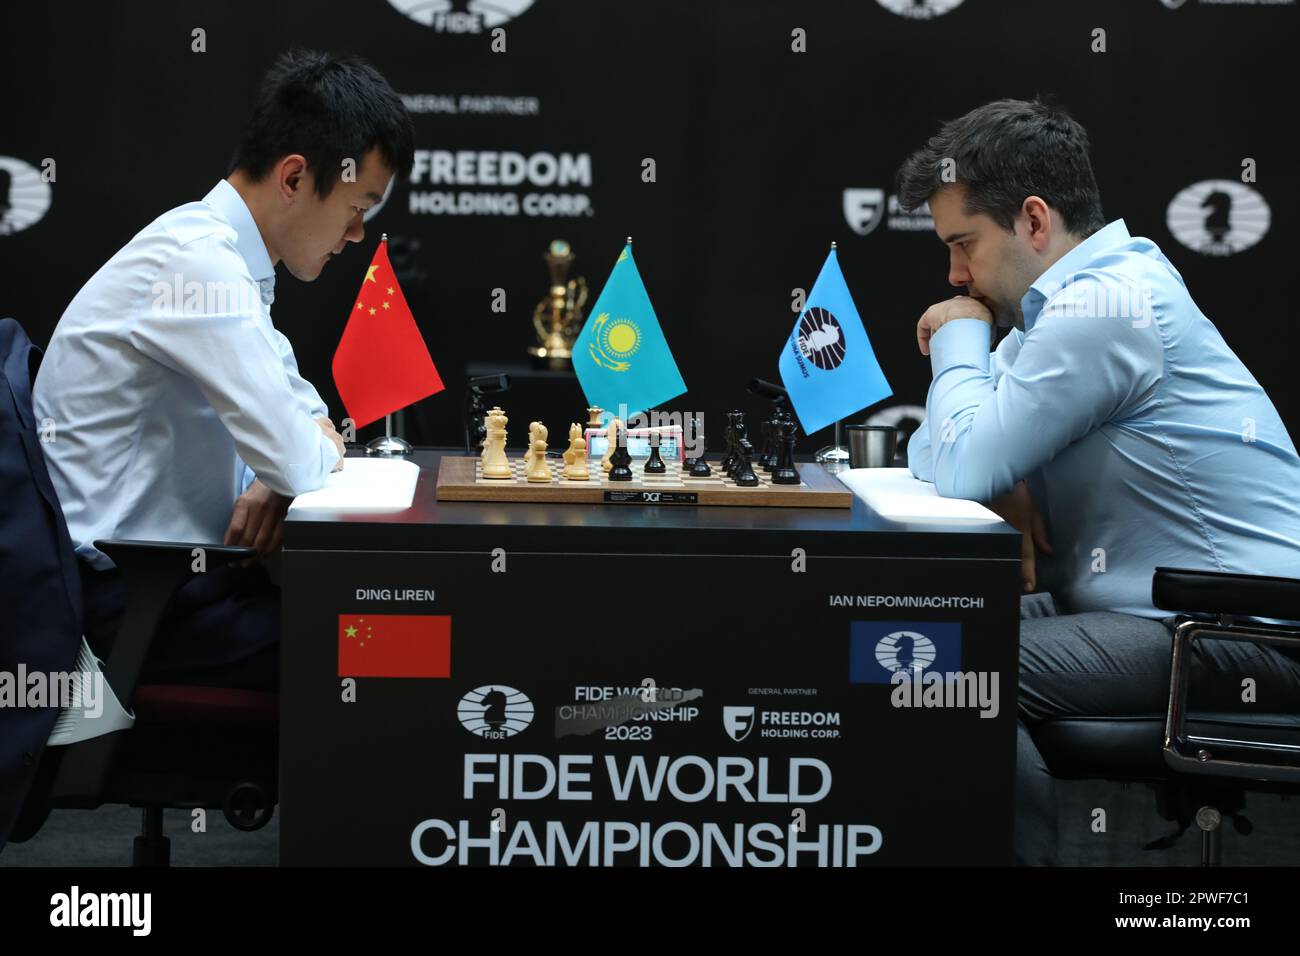 That firm handshake at the end, Ding Liren vs Carlsen